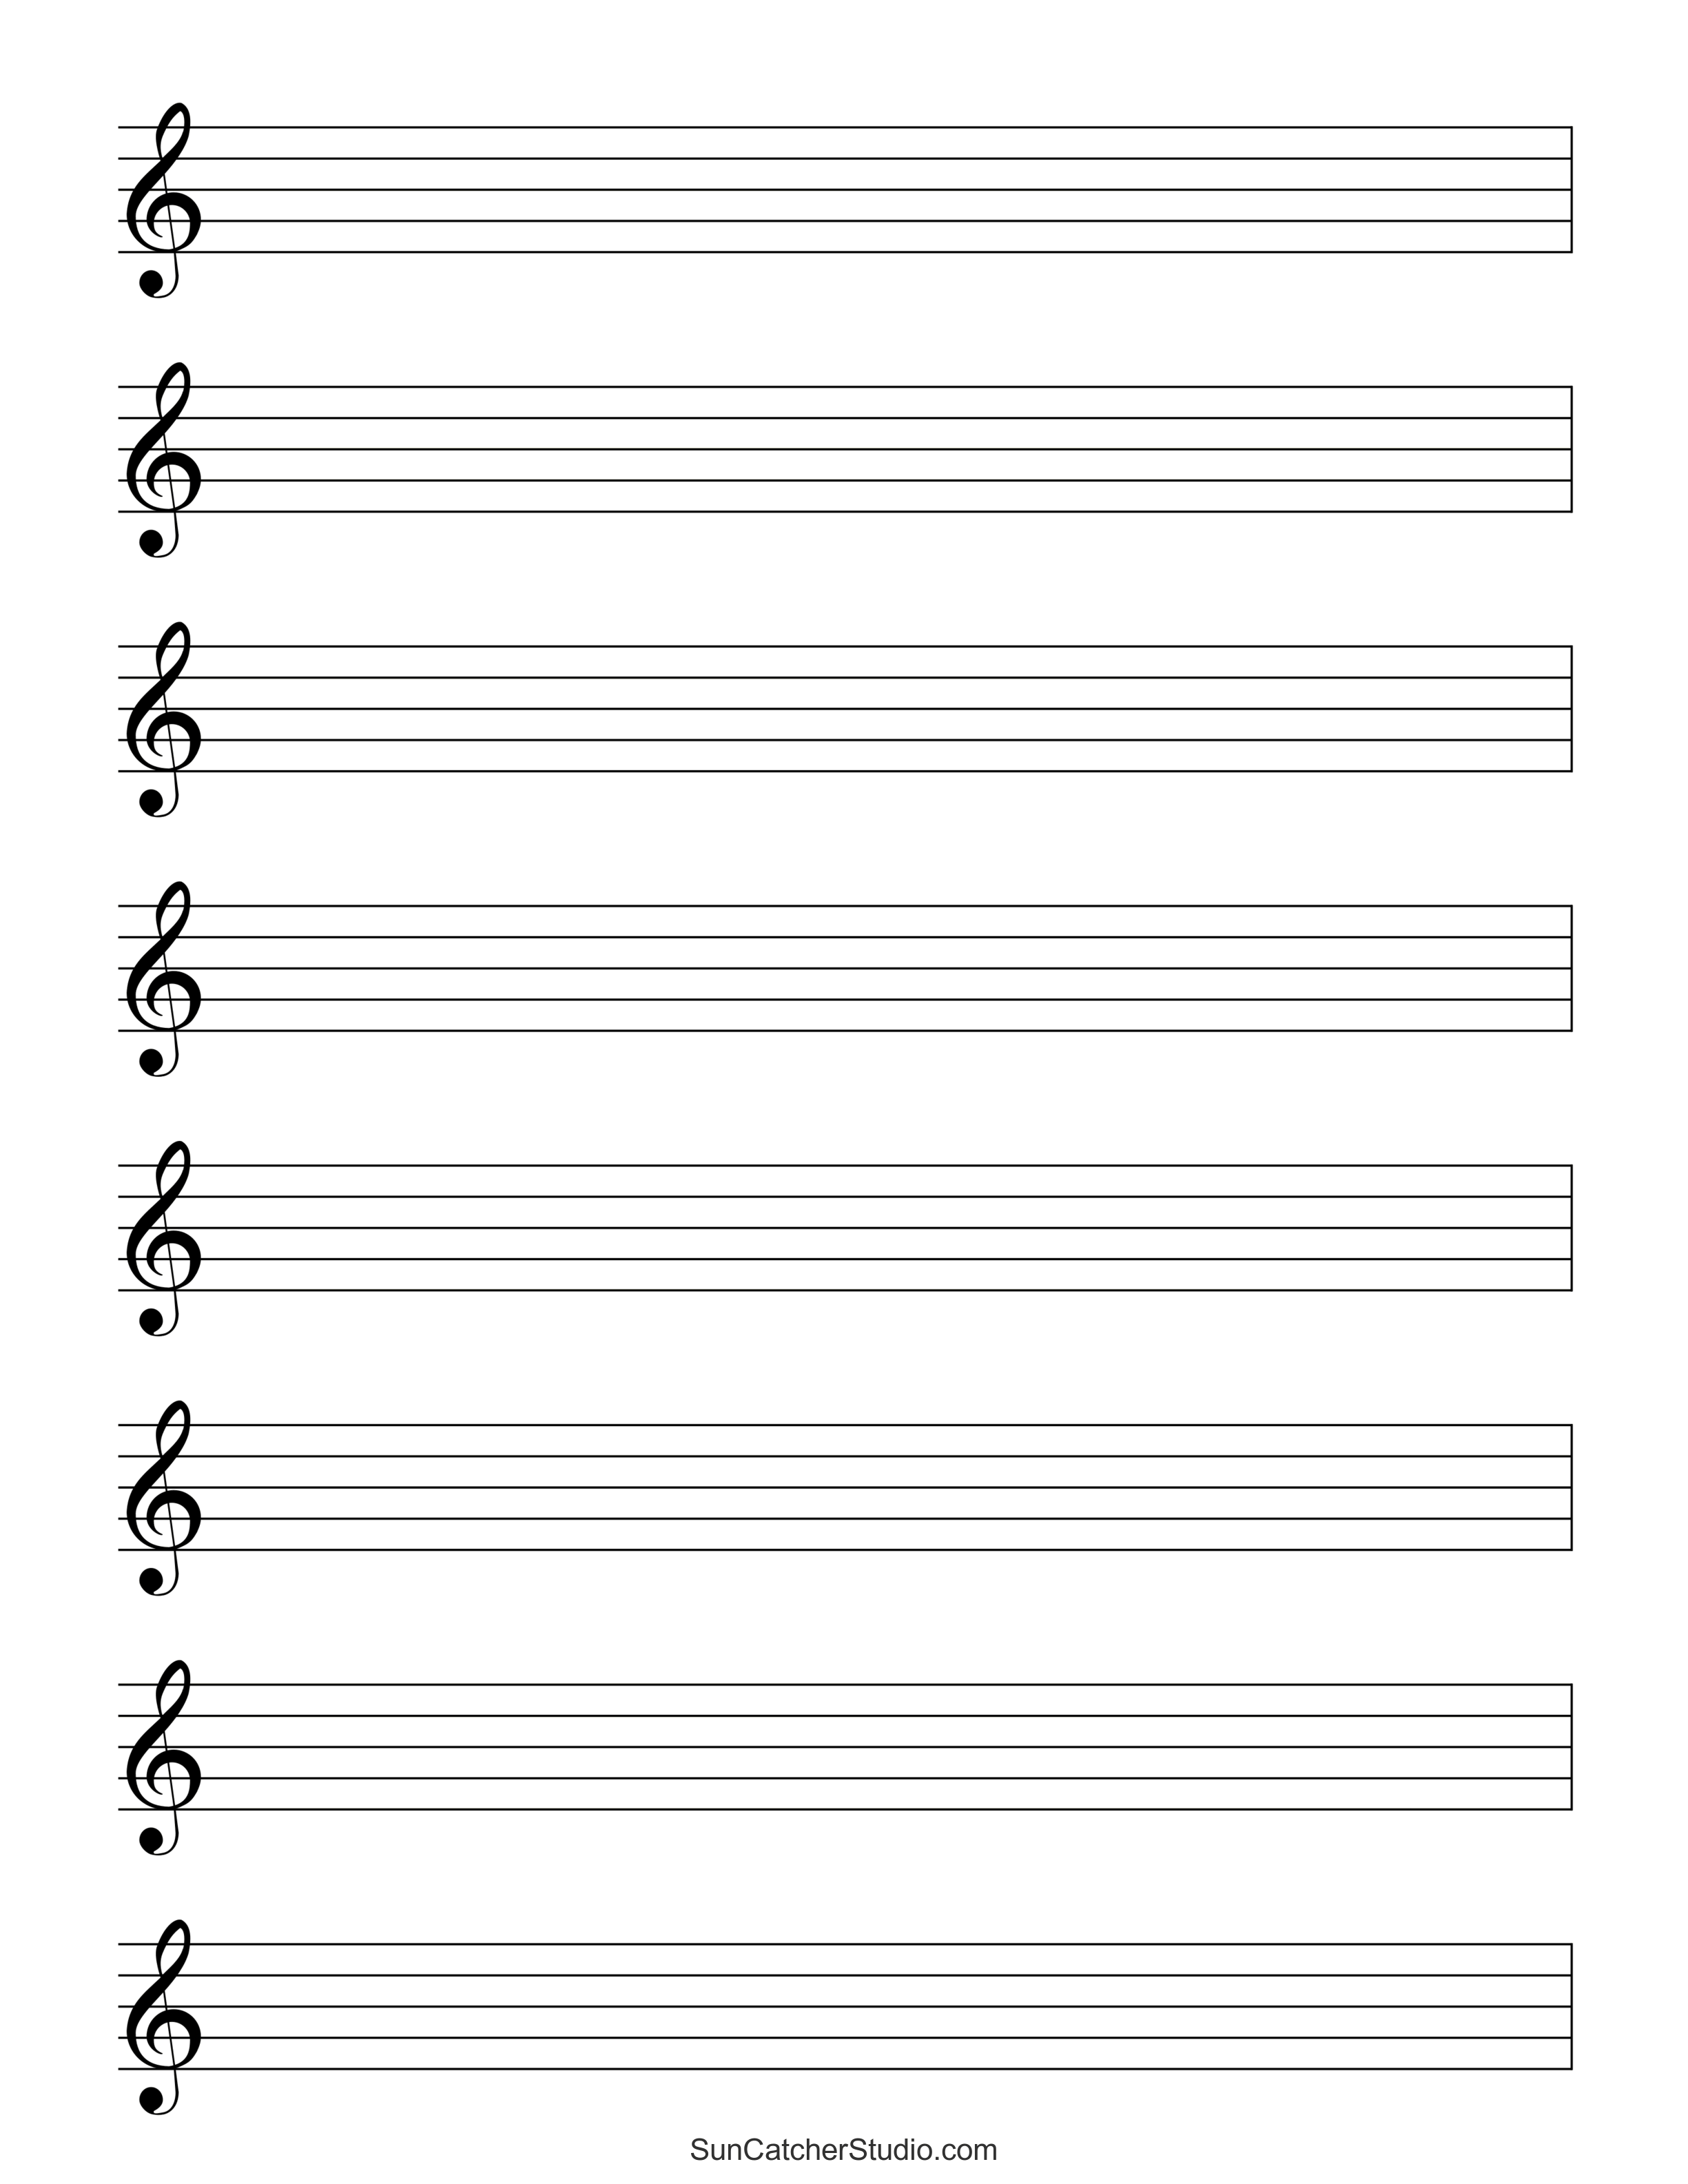 treble clef staff paper